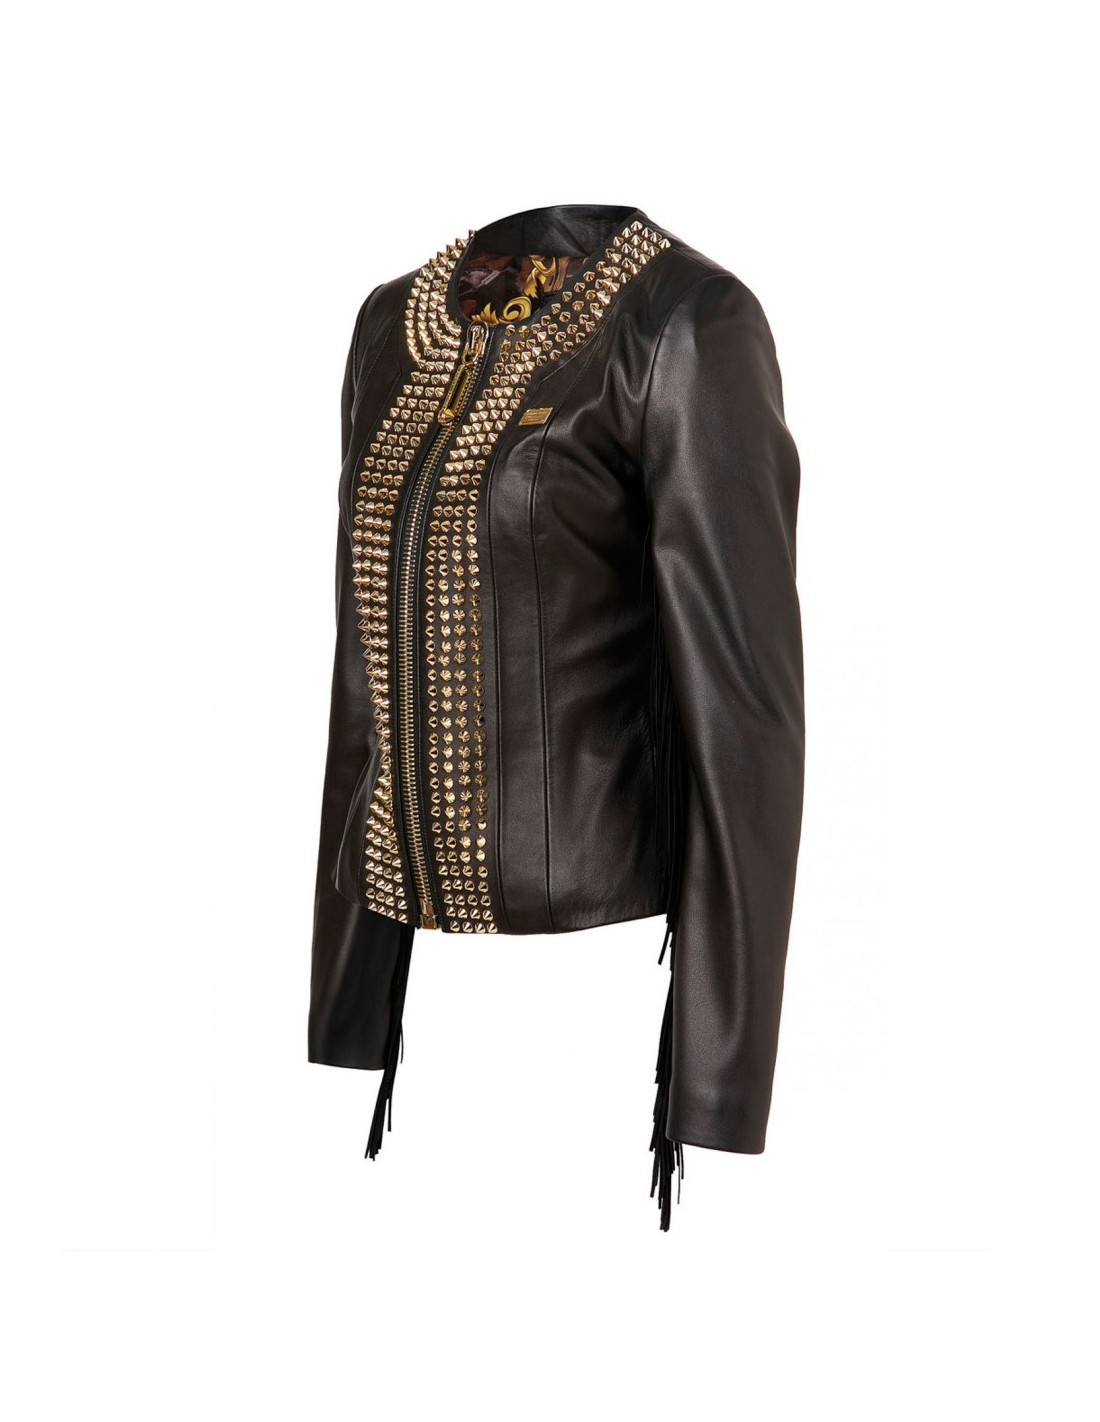 Philipp Plein Leather Jacket 'Cowboy Style' at altamoda.shop